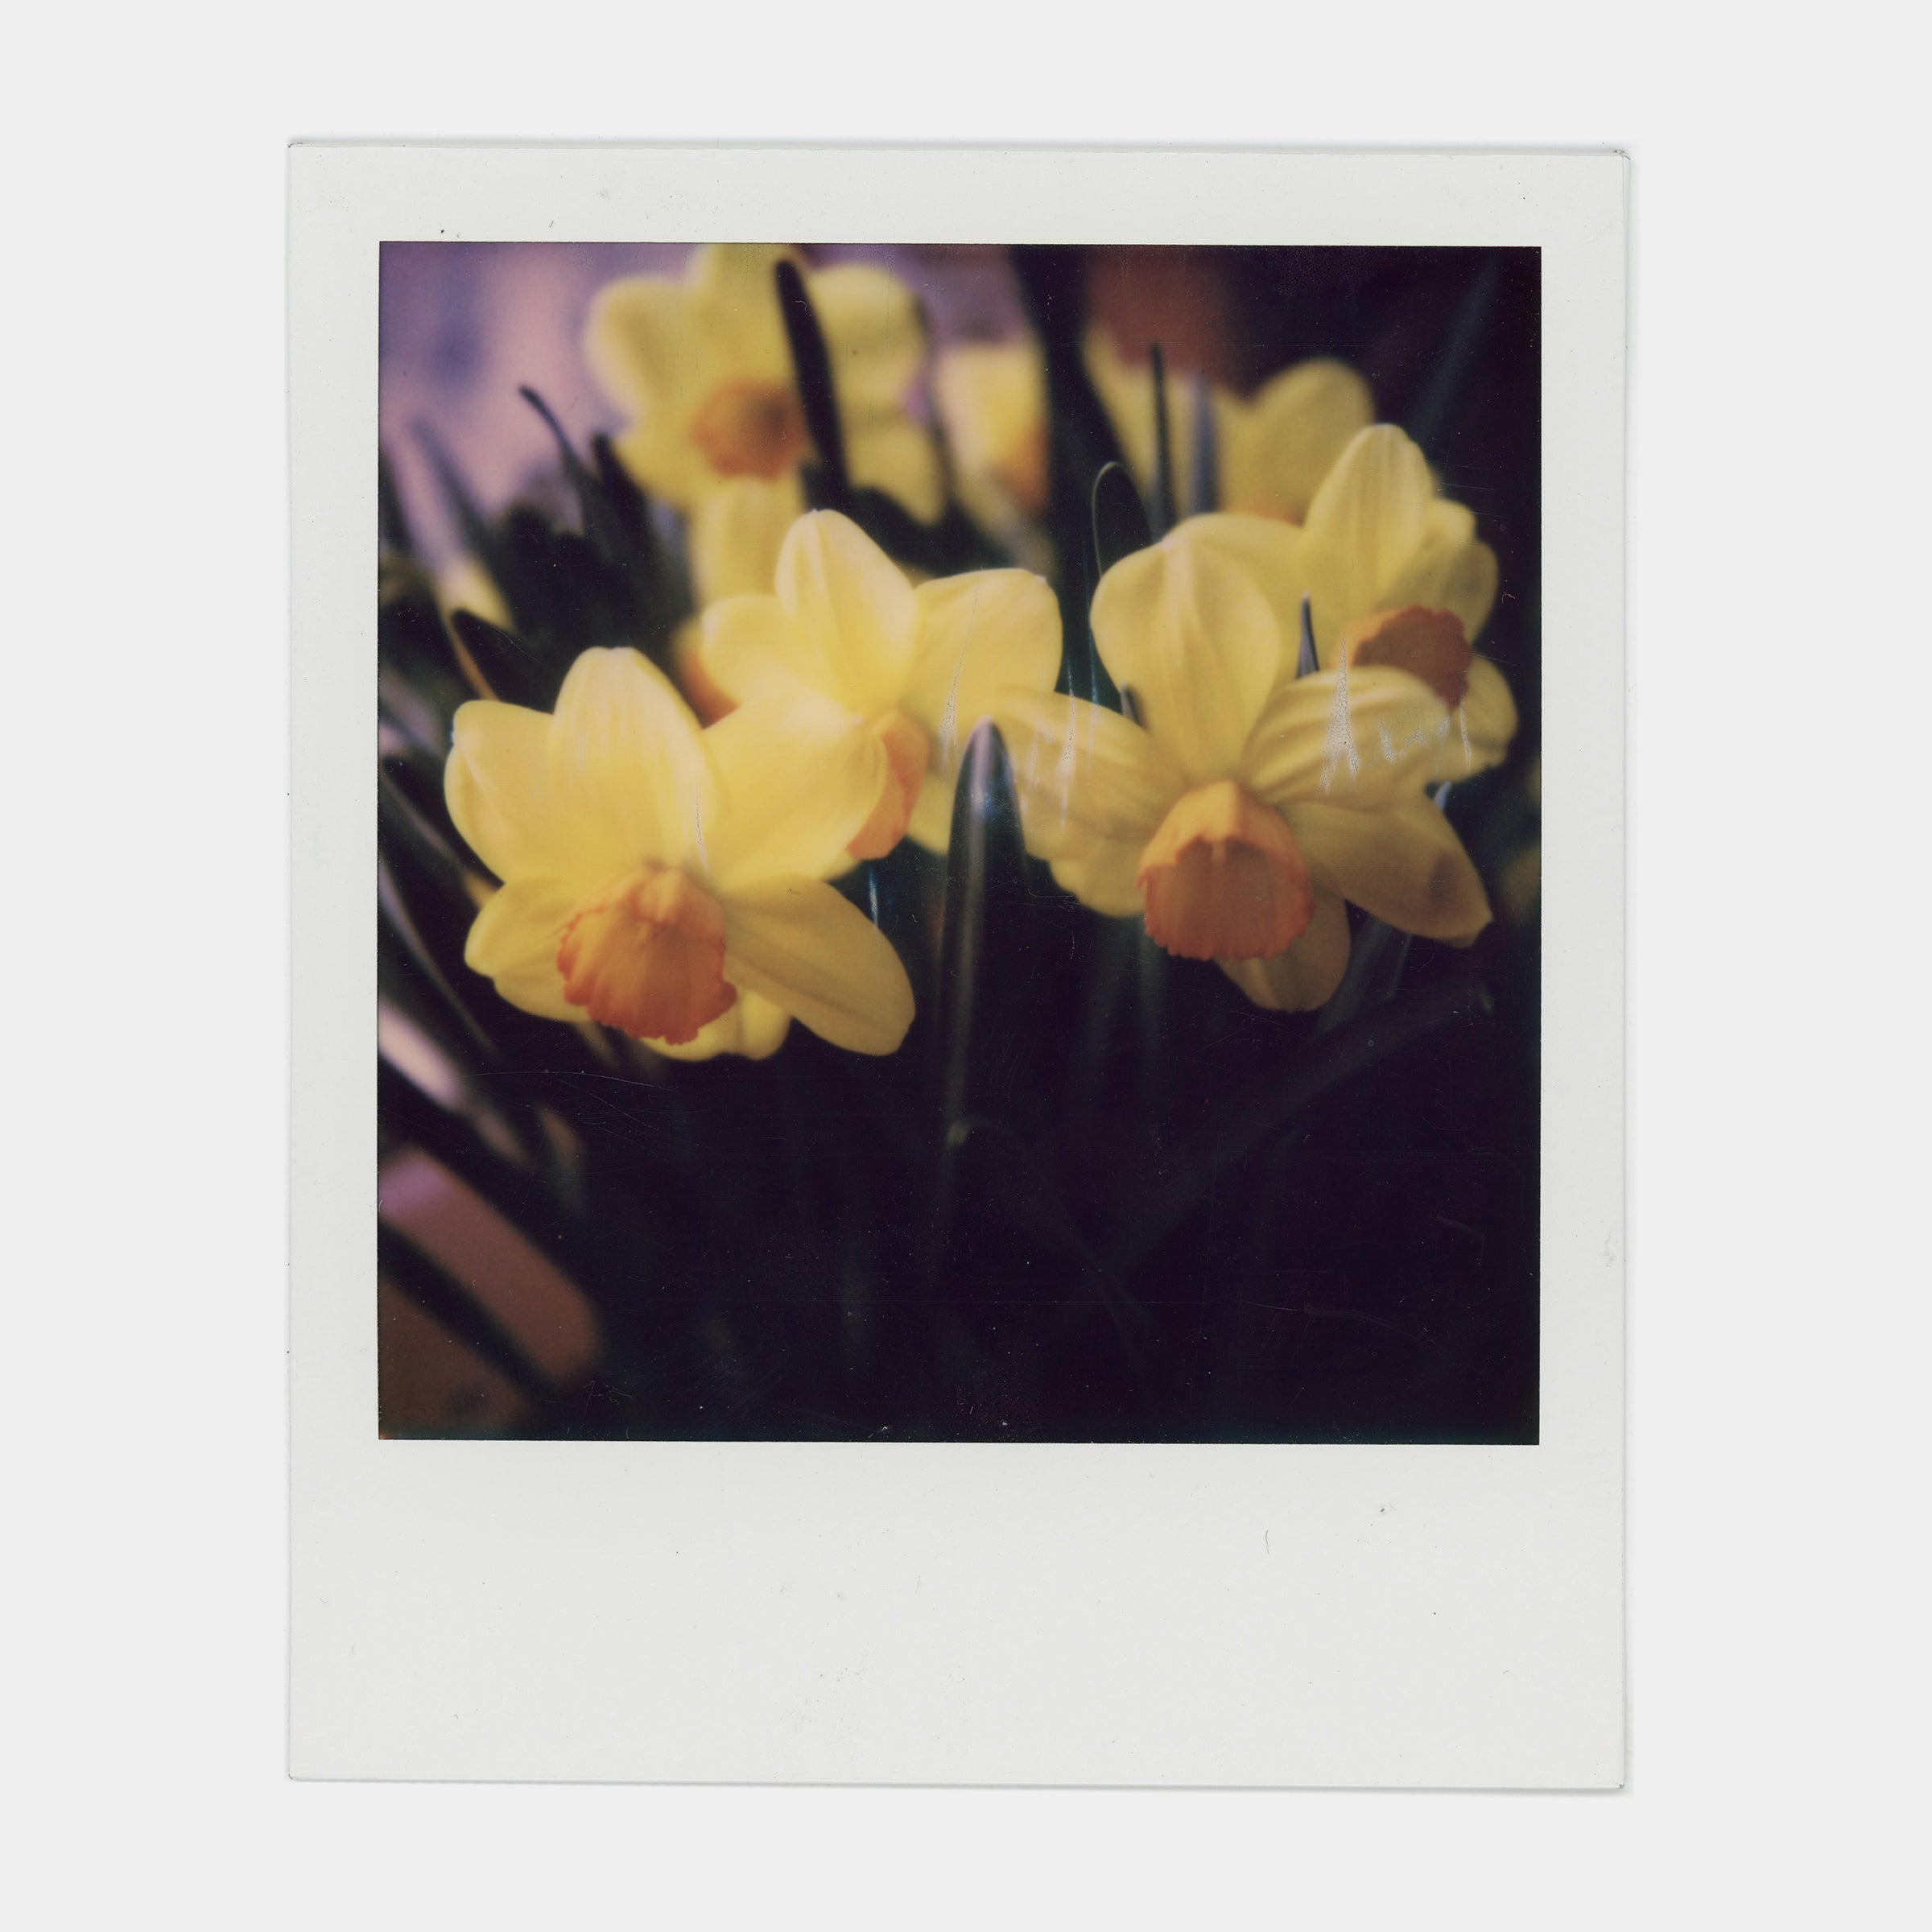 Polaroid 600 Color Instant Film 2-Pak (5 pakken van 16 stuks